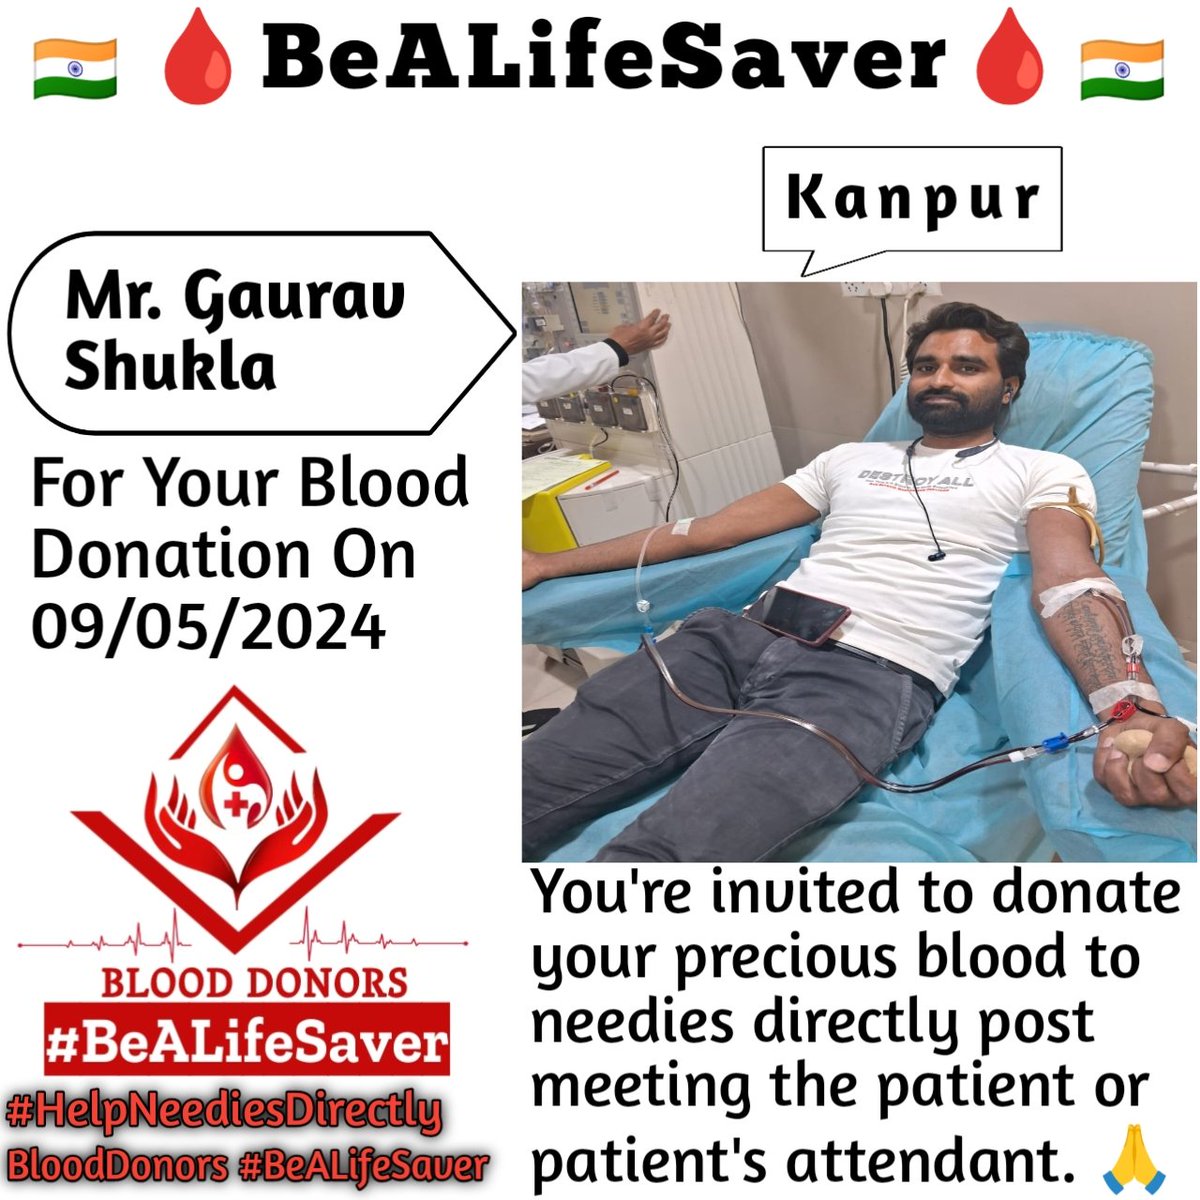 🙏 Congrats For Blood Donation 🙏
Kanpur BeALifeSaver
Kudos_Mr_Gaurav_Shukla_Ji

Today's hero
Mr. Gaurav_Shukla Ji donated blood in Kanpur for one of the needies. Heartfelt Gratitude and Respect to Gaurav Shukla Ji for his blood donation for Patient admitted in Kanpur.